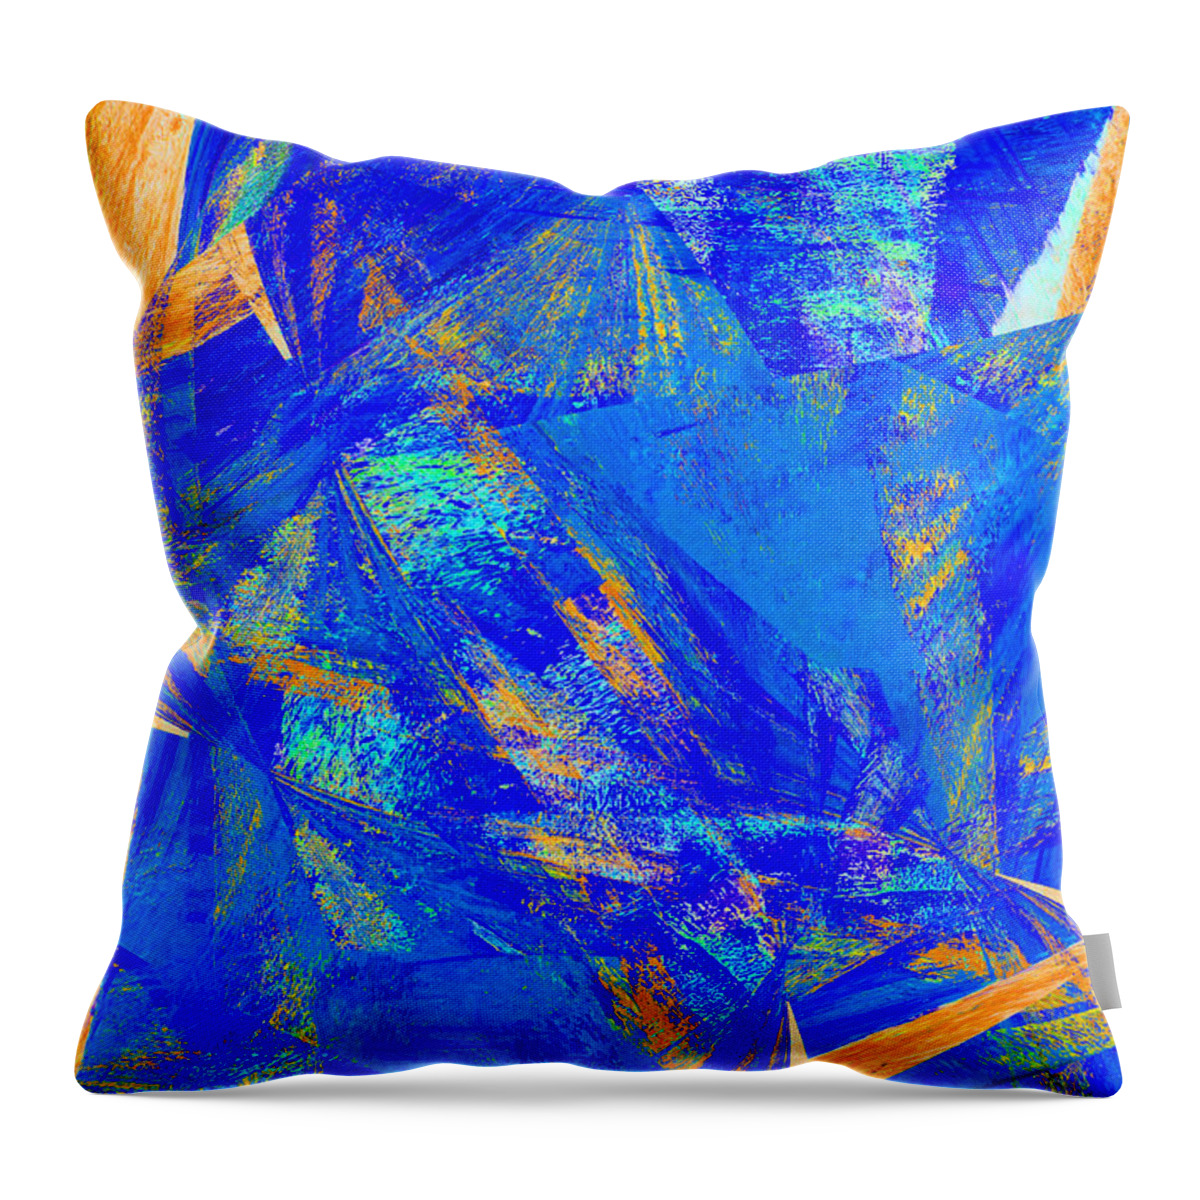 Digital Throw Pillow featuring the digital art Last Days of Summer by Stephanie Grant